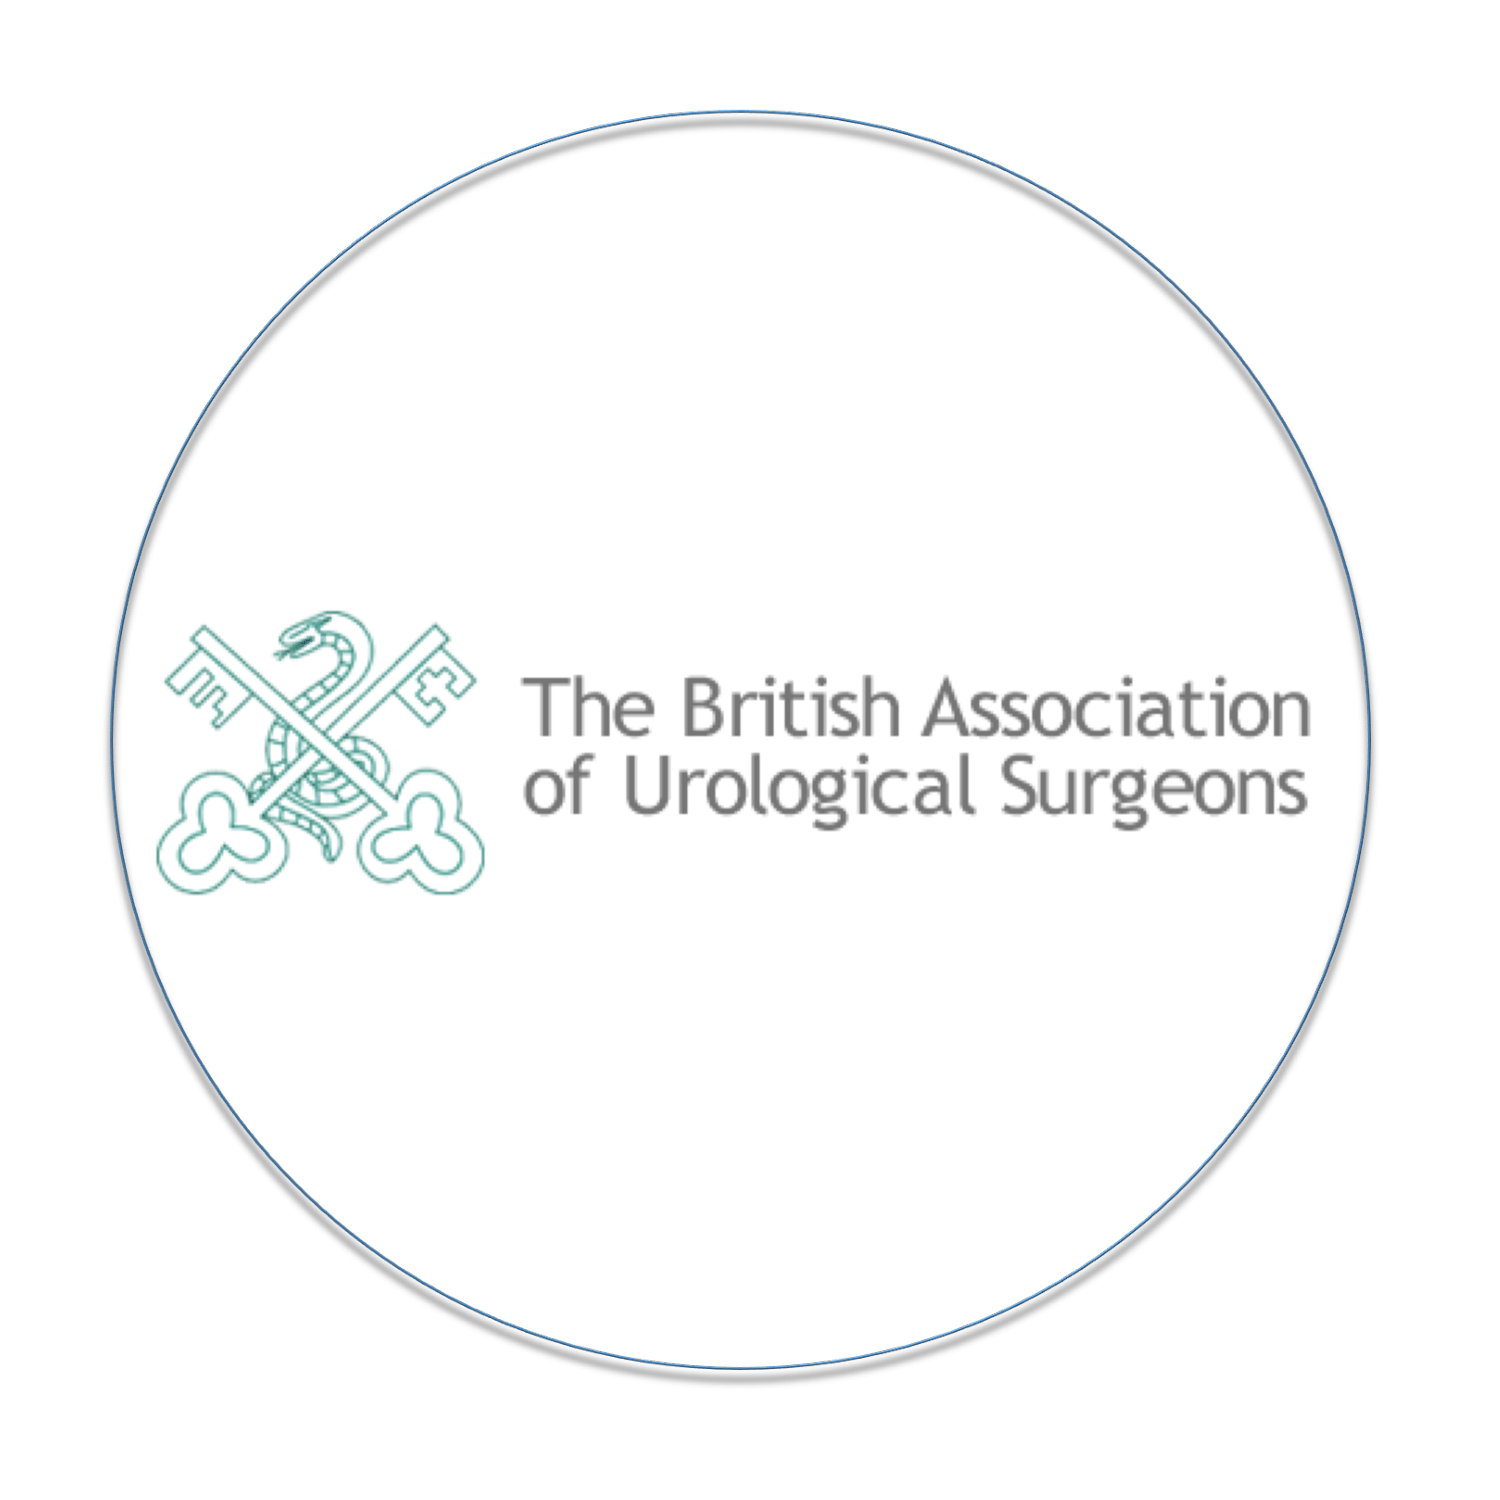 The British Association of Urological Surgeons